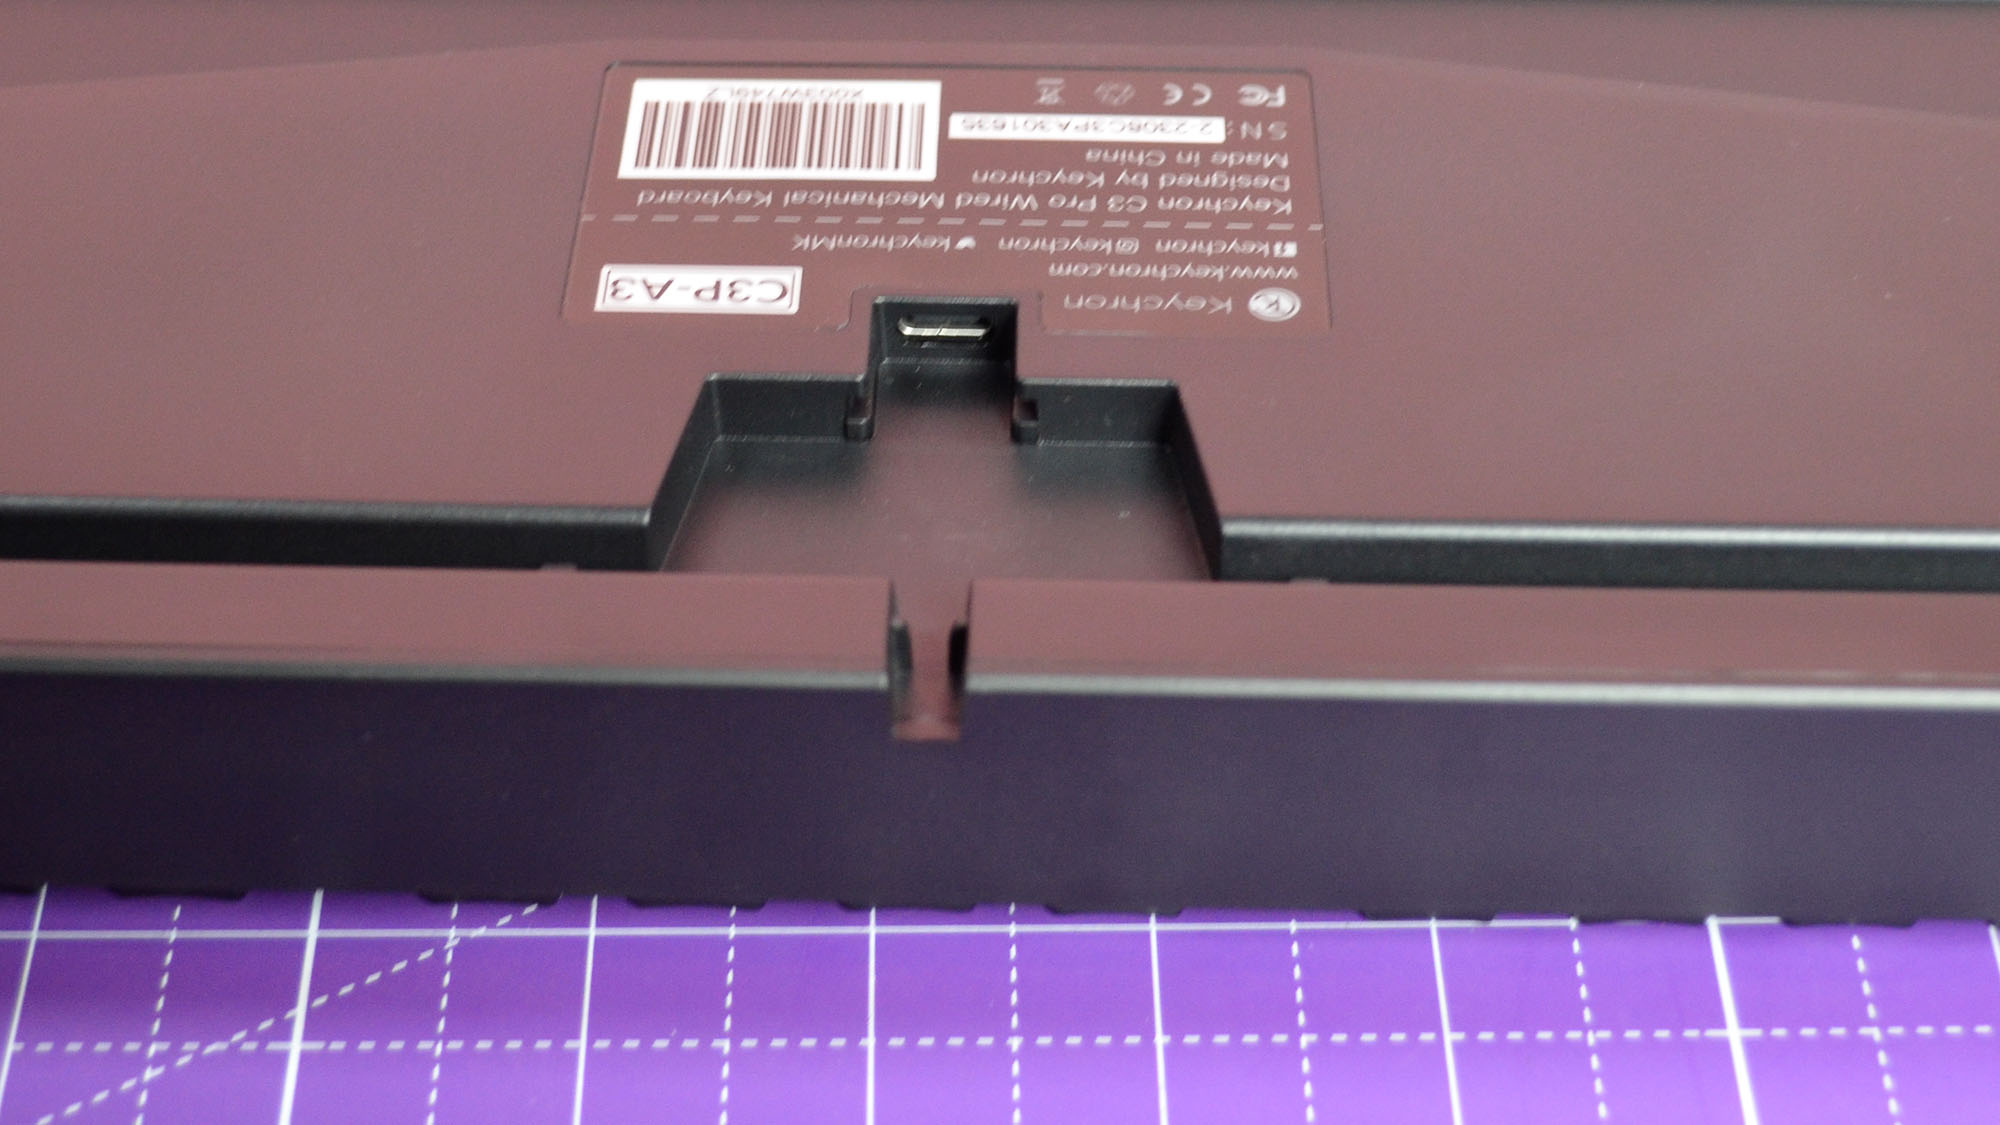 The Keychron C3 Pro on a purple deskmat